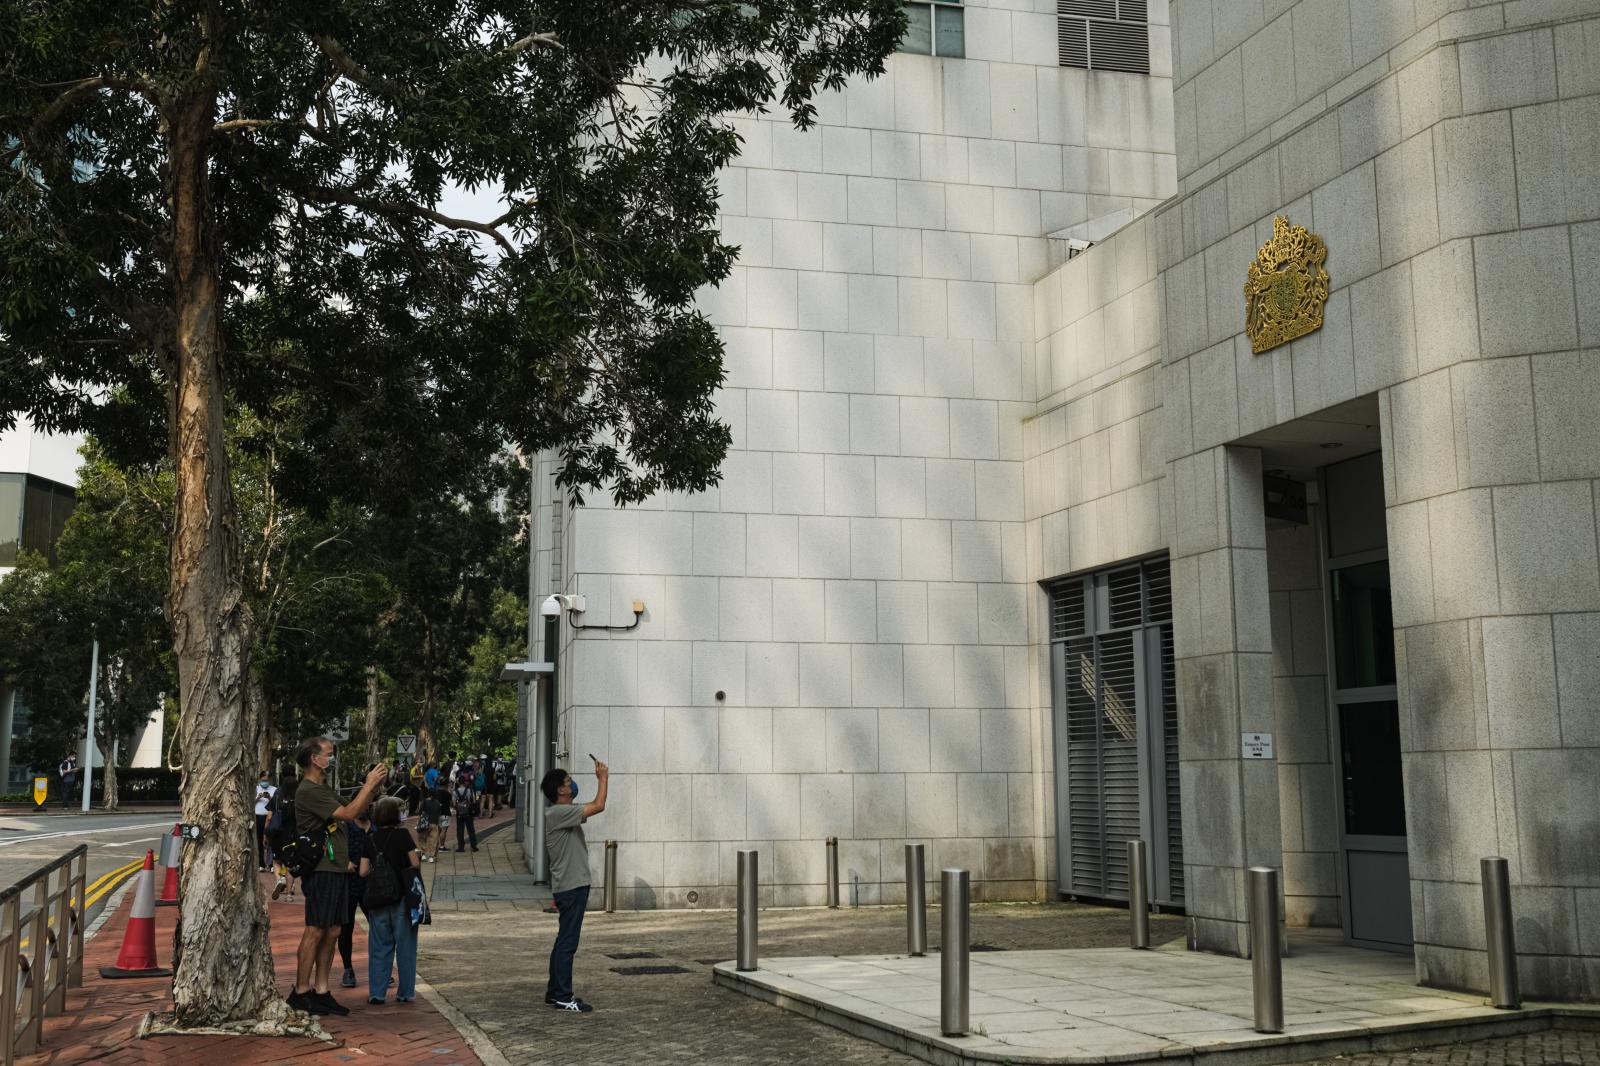 People take photos outside British embassy